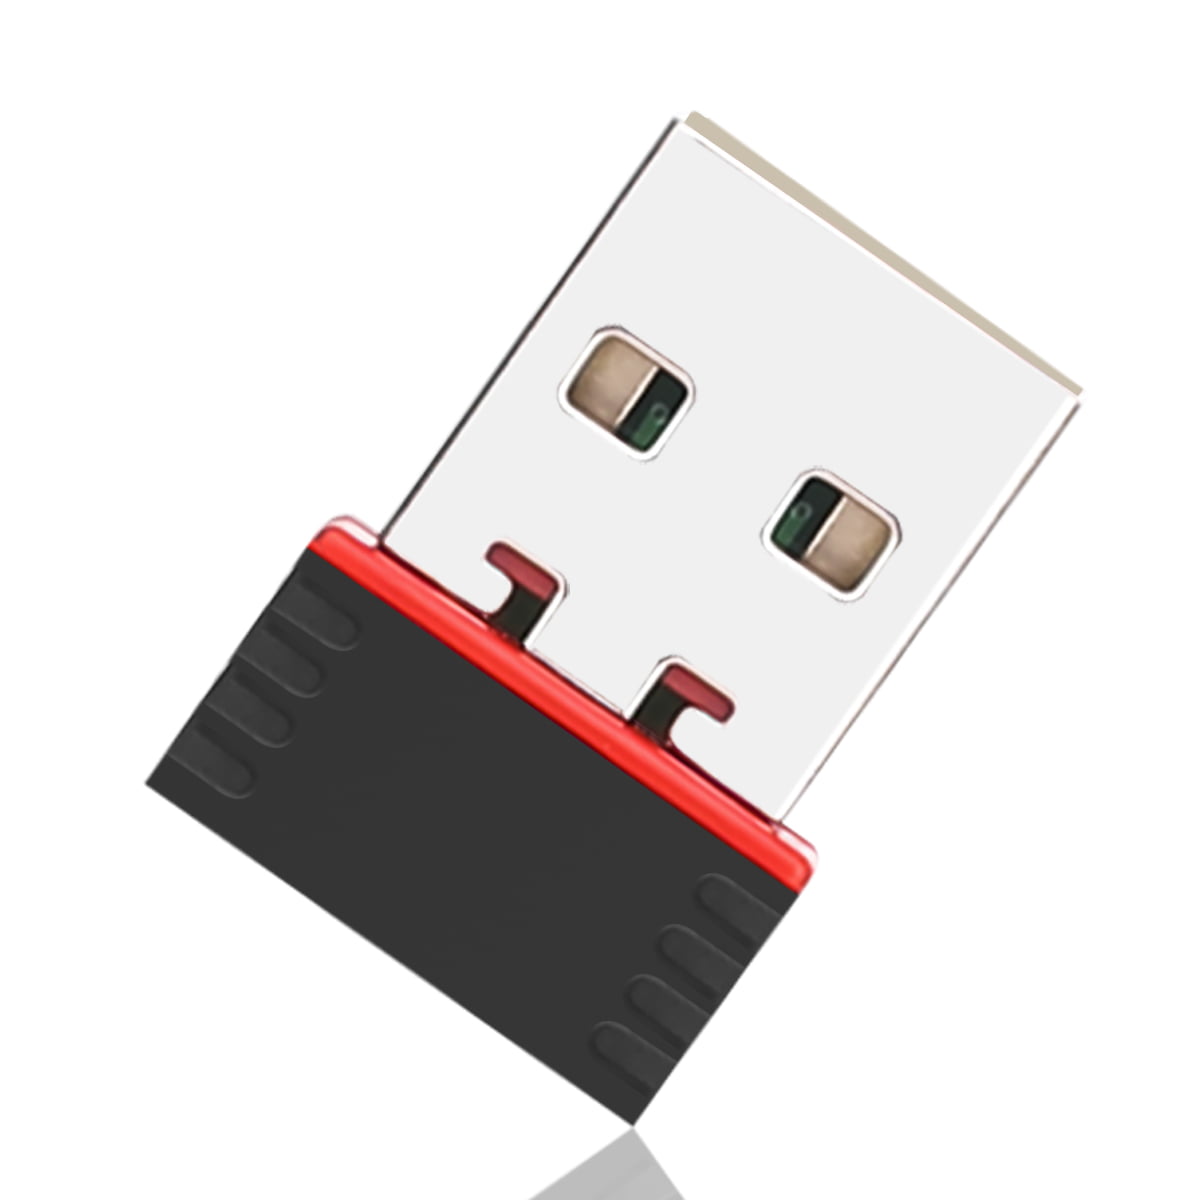 USB ANT+Stick an Adapter for Garmin,Sunnto,Zwift,TacX,Bkool,PerfPRO Studio,CA1V3 